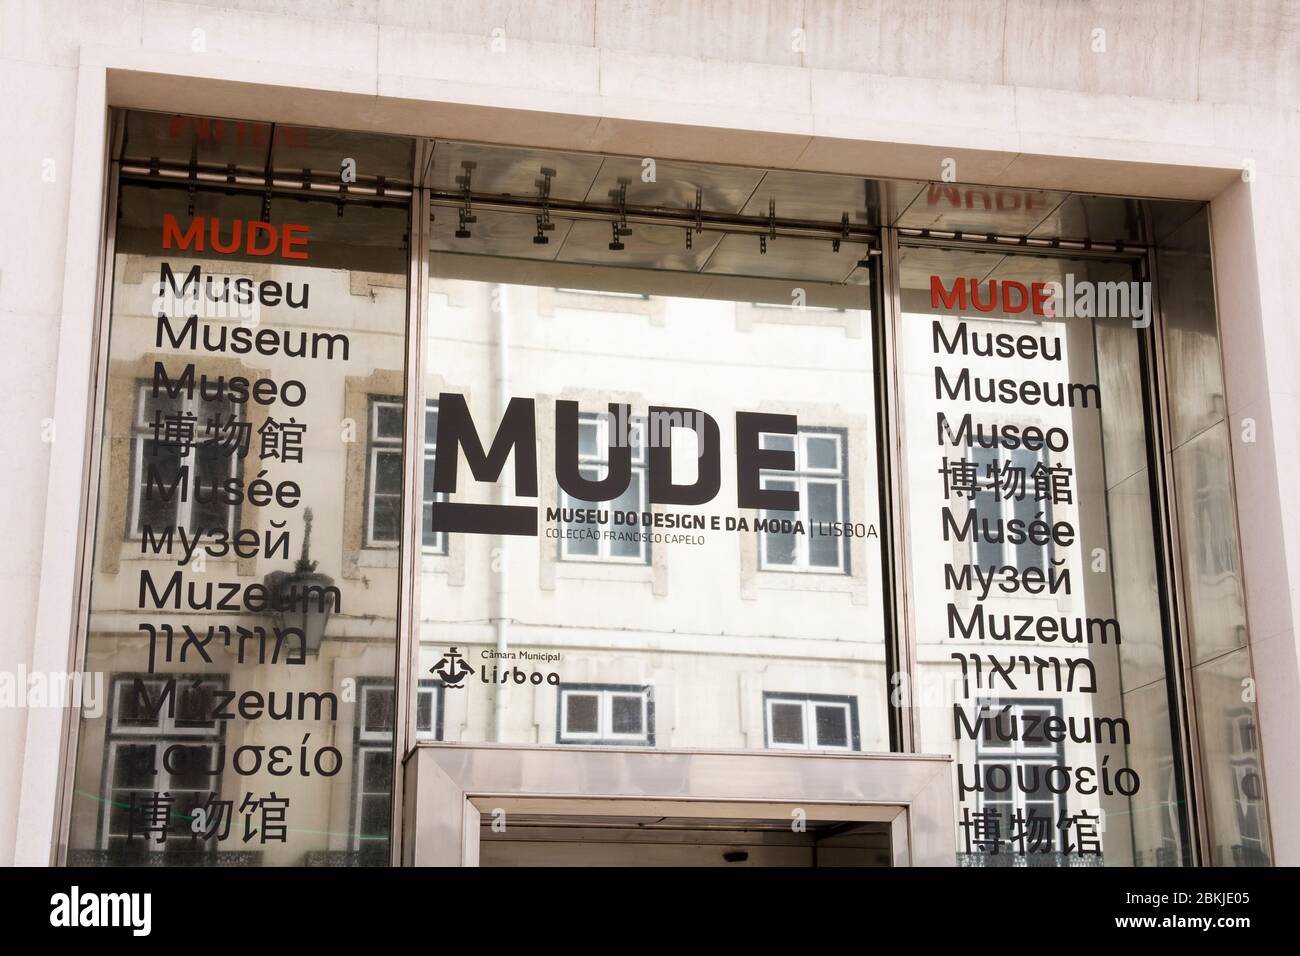 MUDE (Museum of Modern Design) on Augusta Street, Baixa District, Lisbon, Portugal, Europe Stock Photo